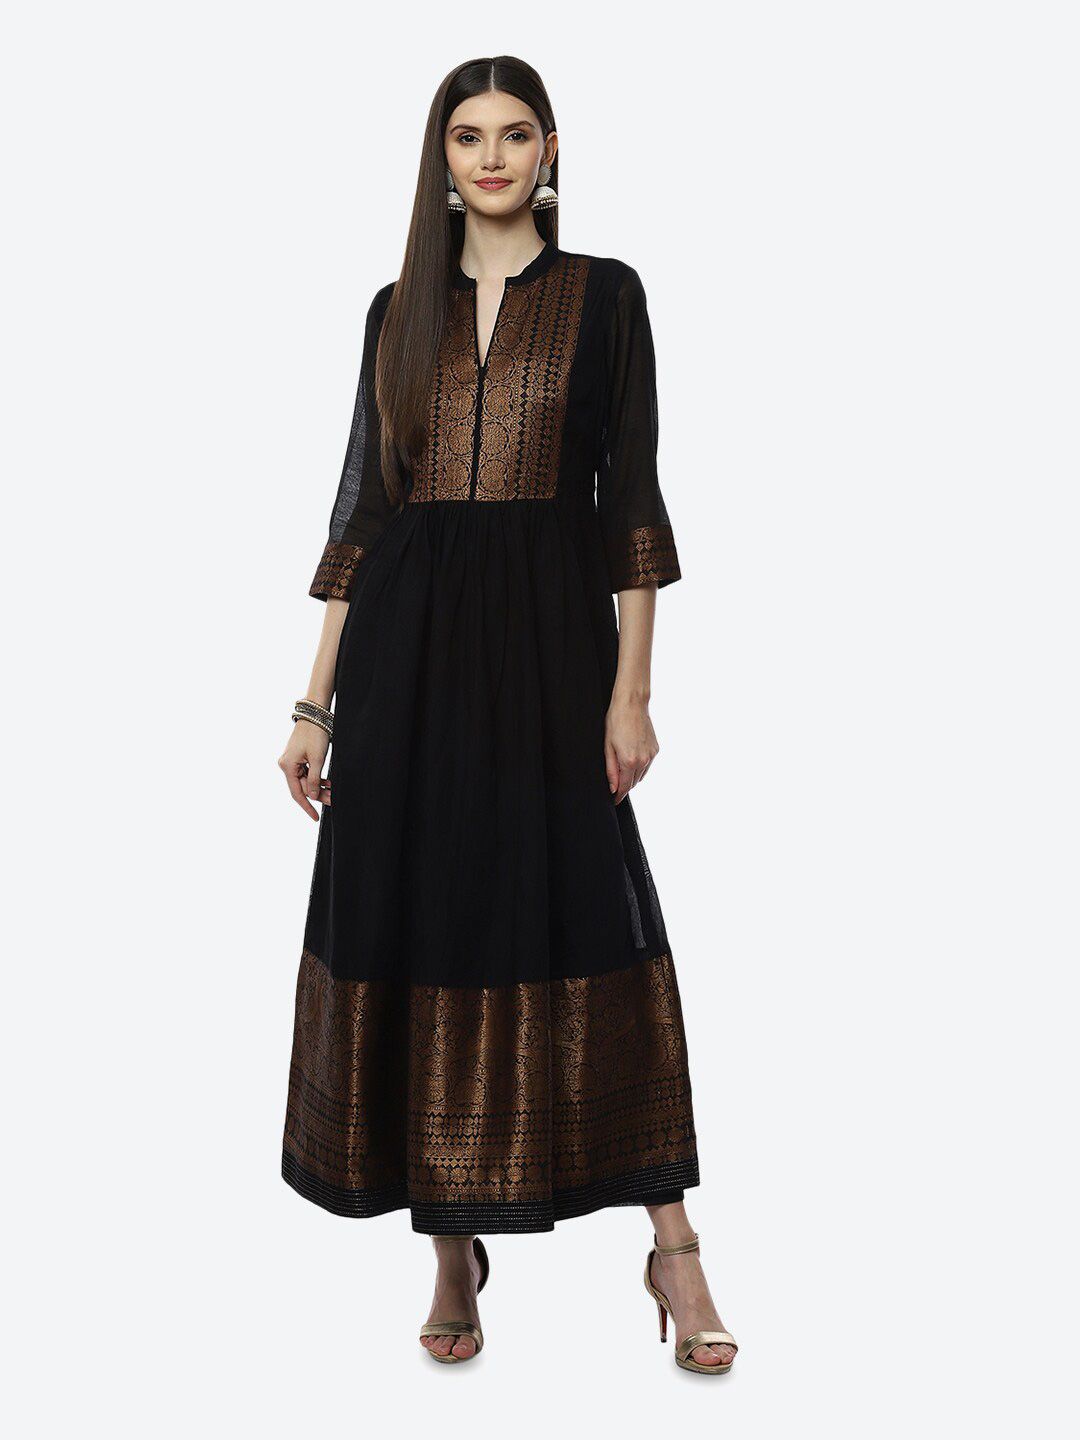 Biba Black Ethnic Motifs Maxi Dress Price in India